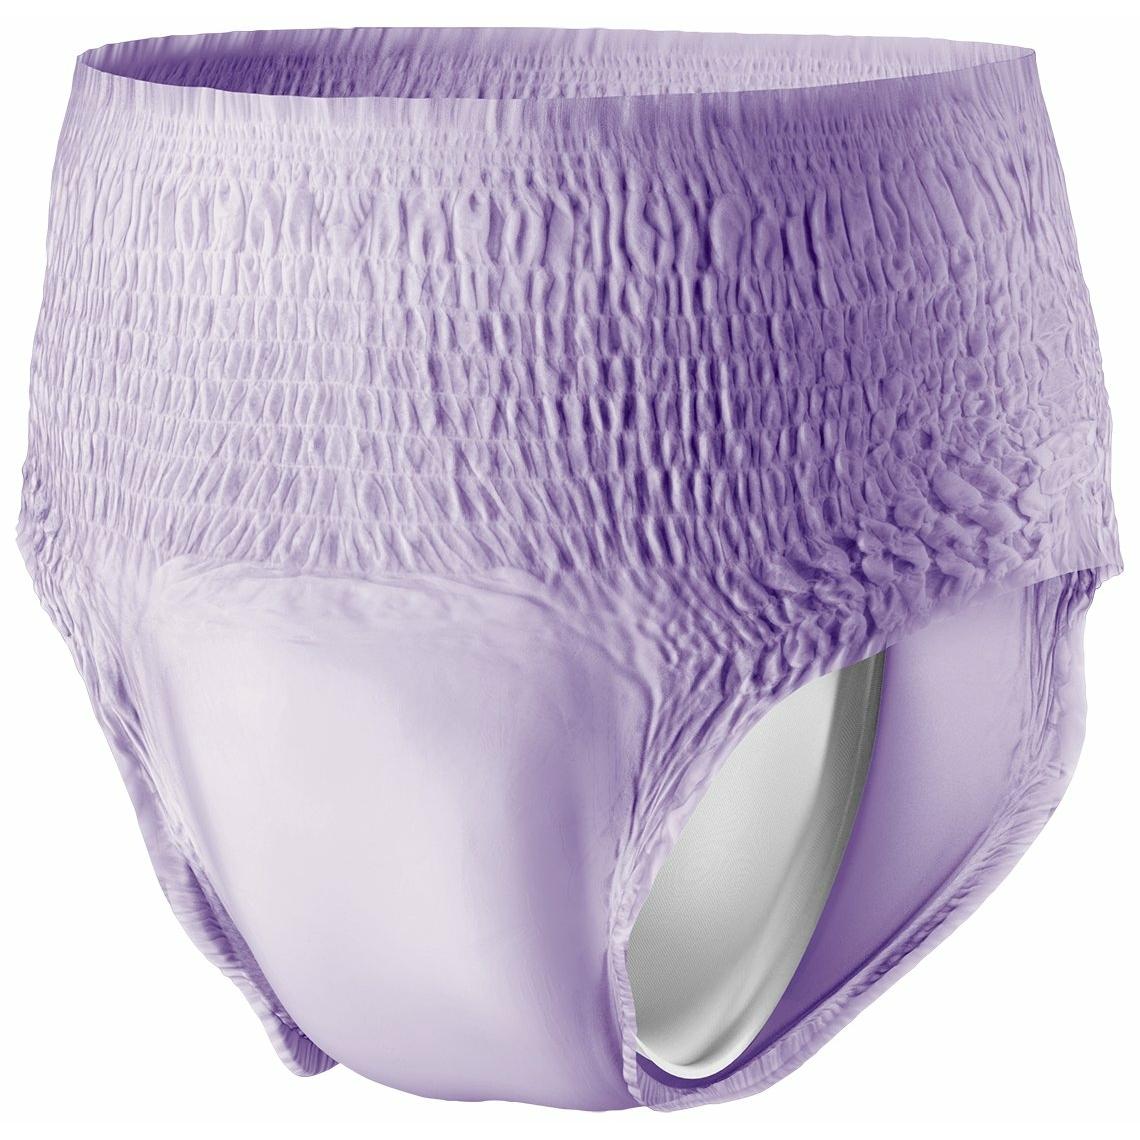 Incontinence underwear disposable  Prevail Disposable Underwear for Women  –